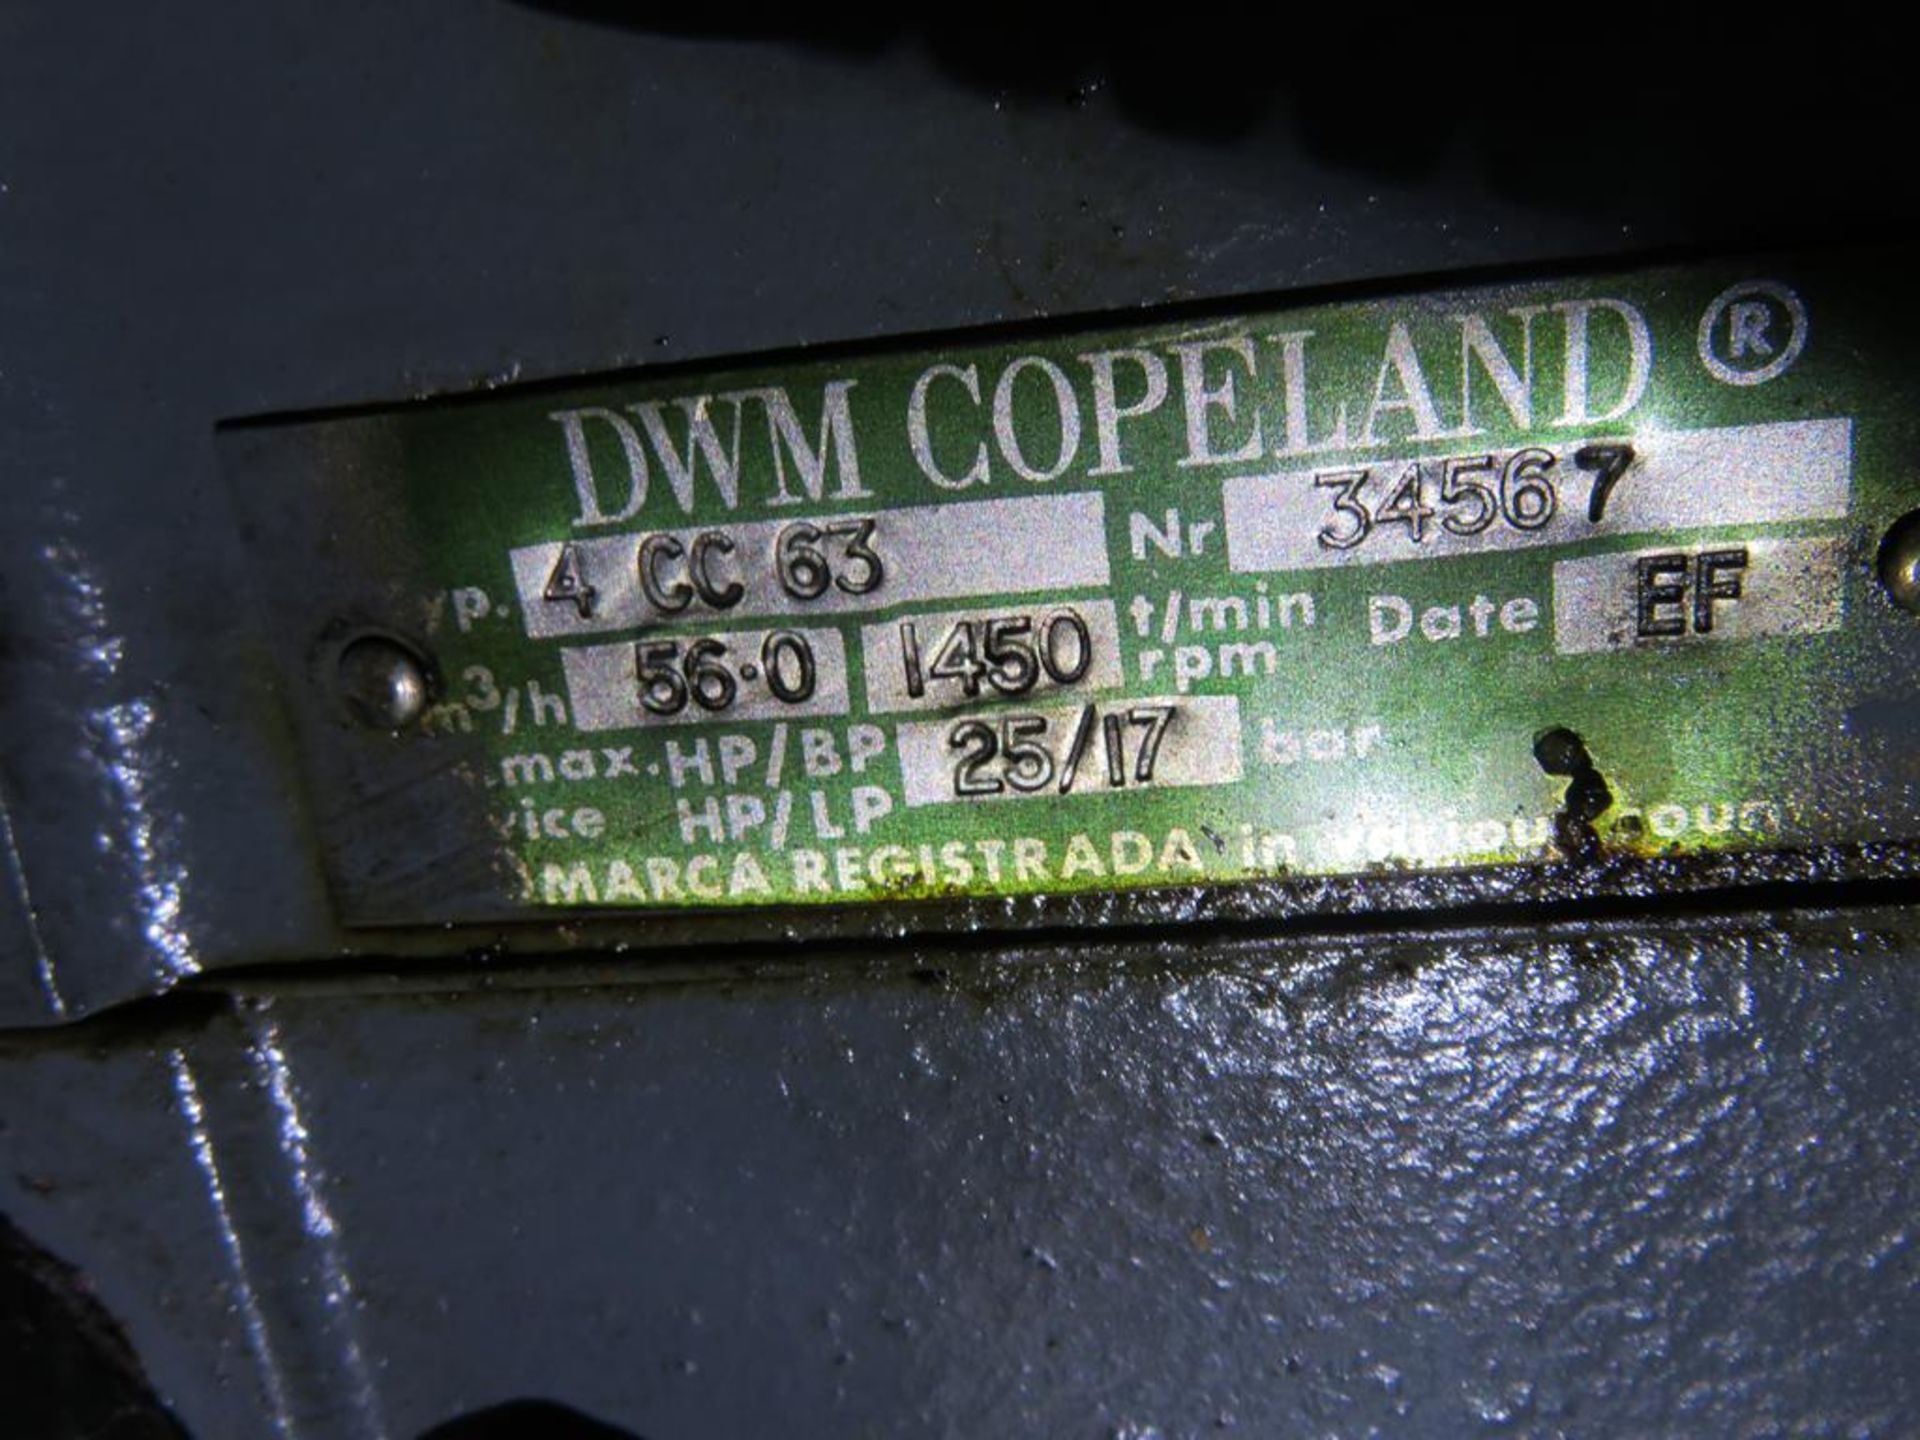 4 x DWM Copeland Refrigeration compressors on indi - Image 4 of 15